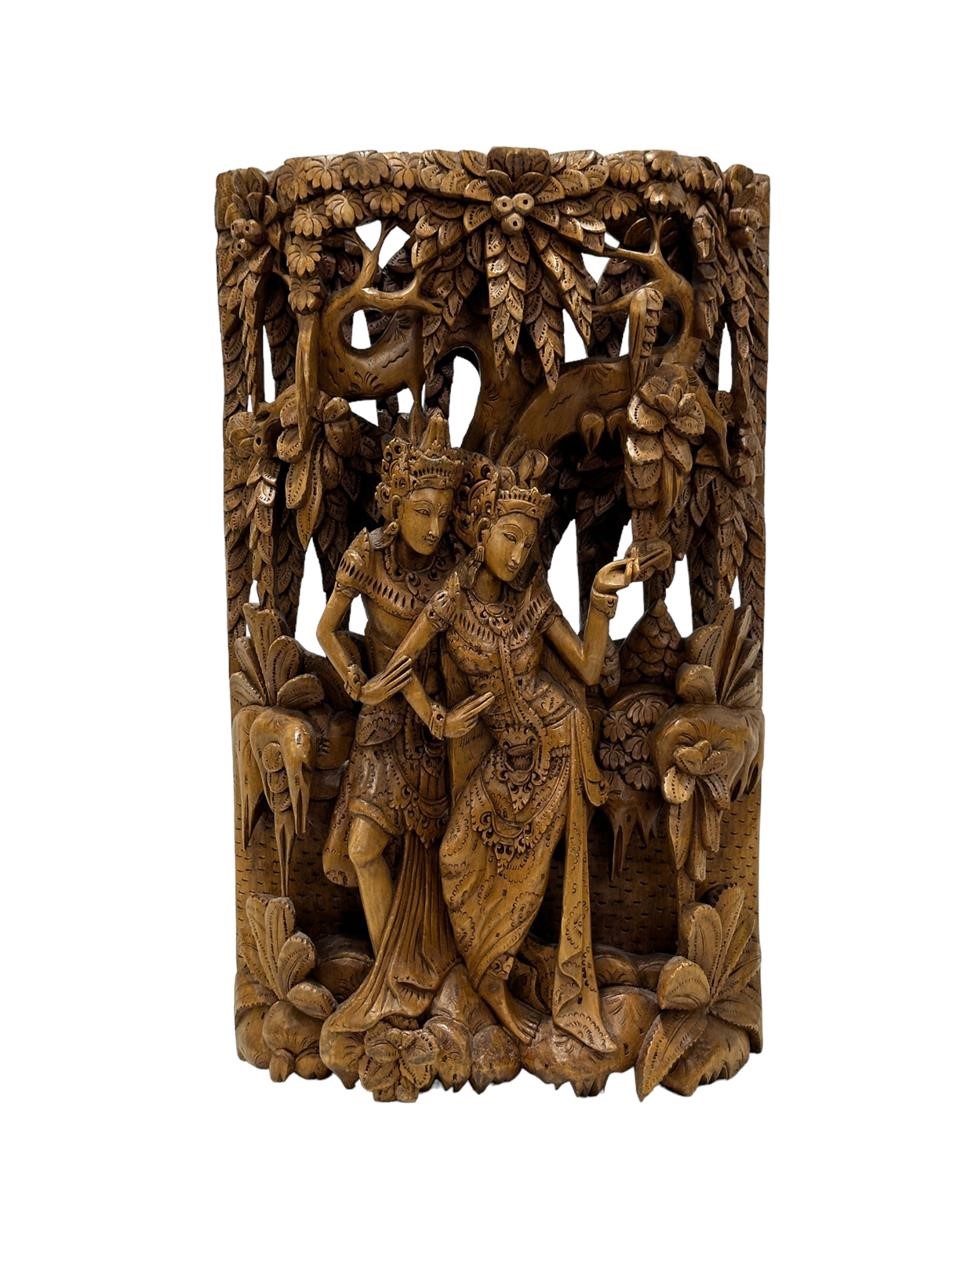 Bali Wood Carving Sculpture